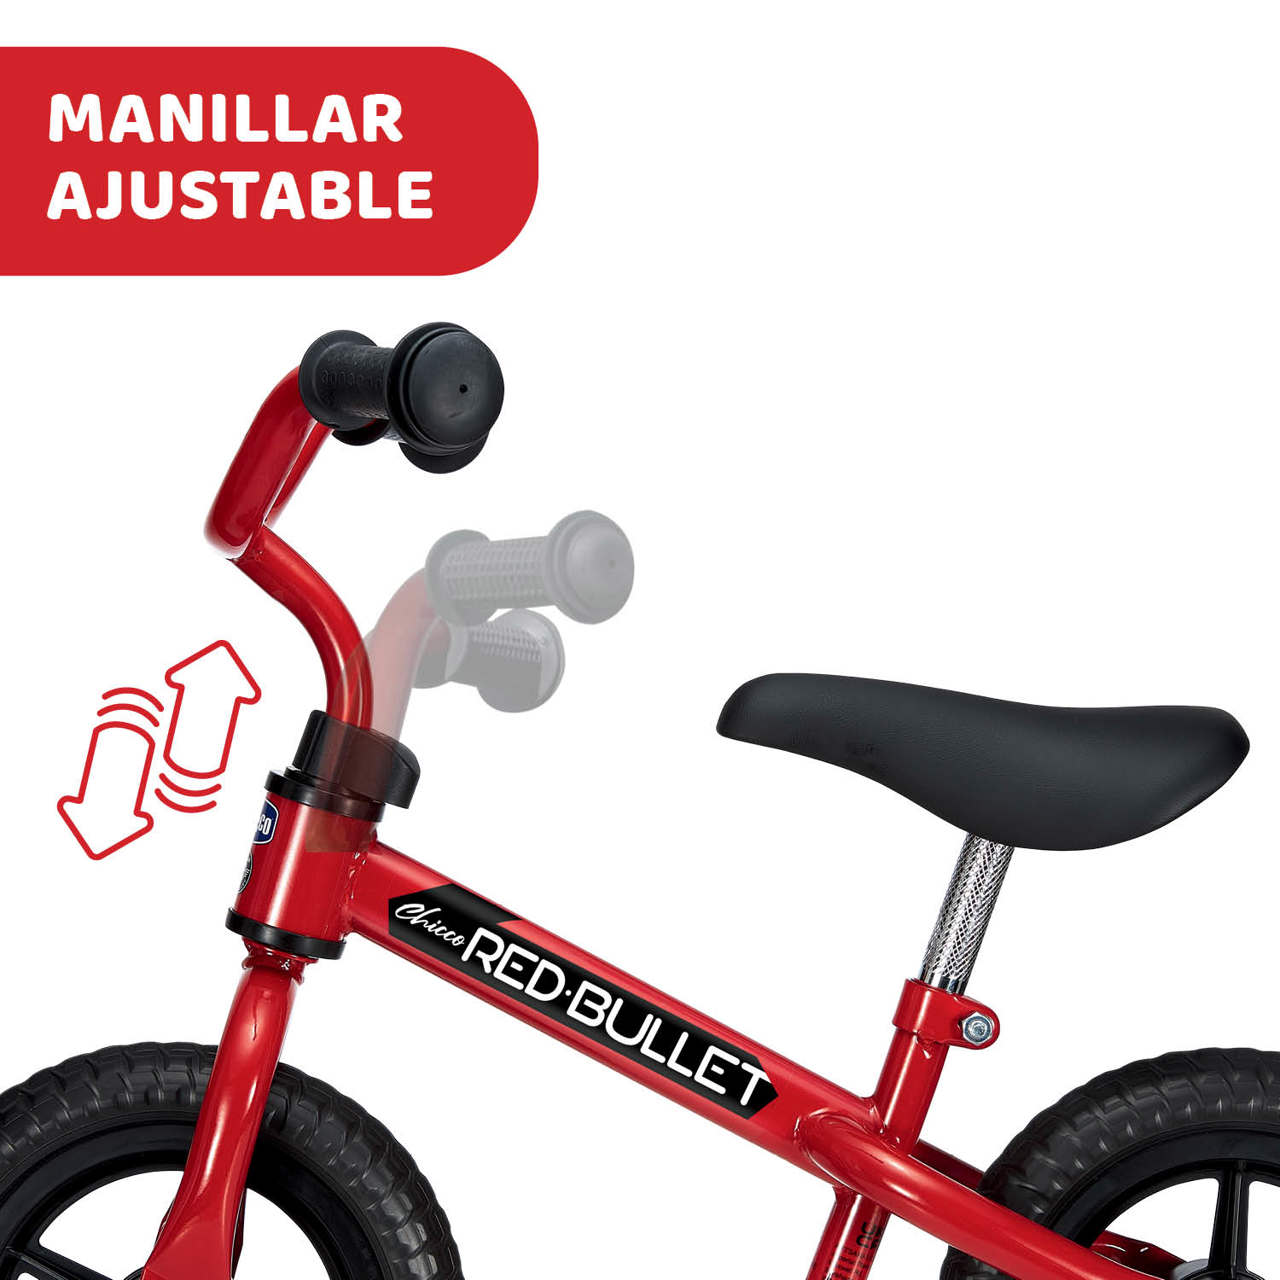 Bicicleta sin pedales CHICCO FIRST BIKE Red Bullet : Tienda bebe online